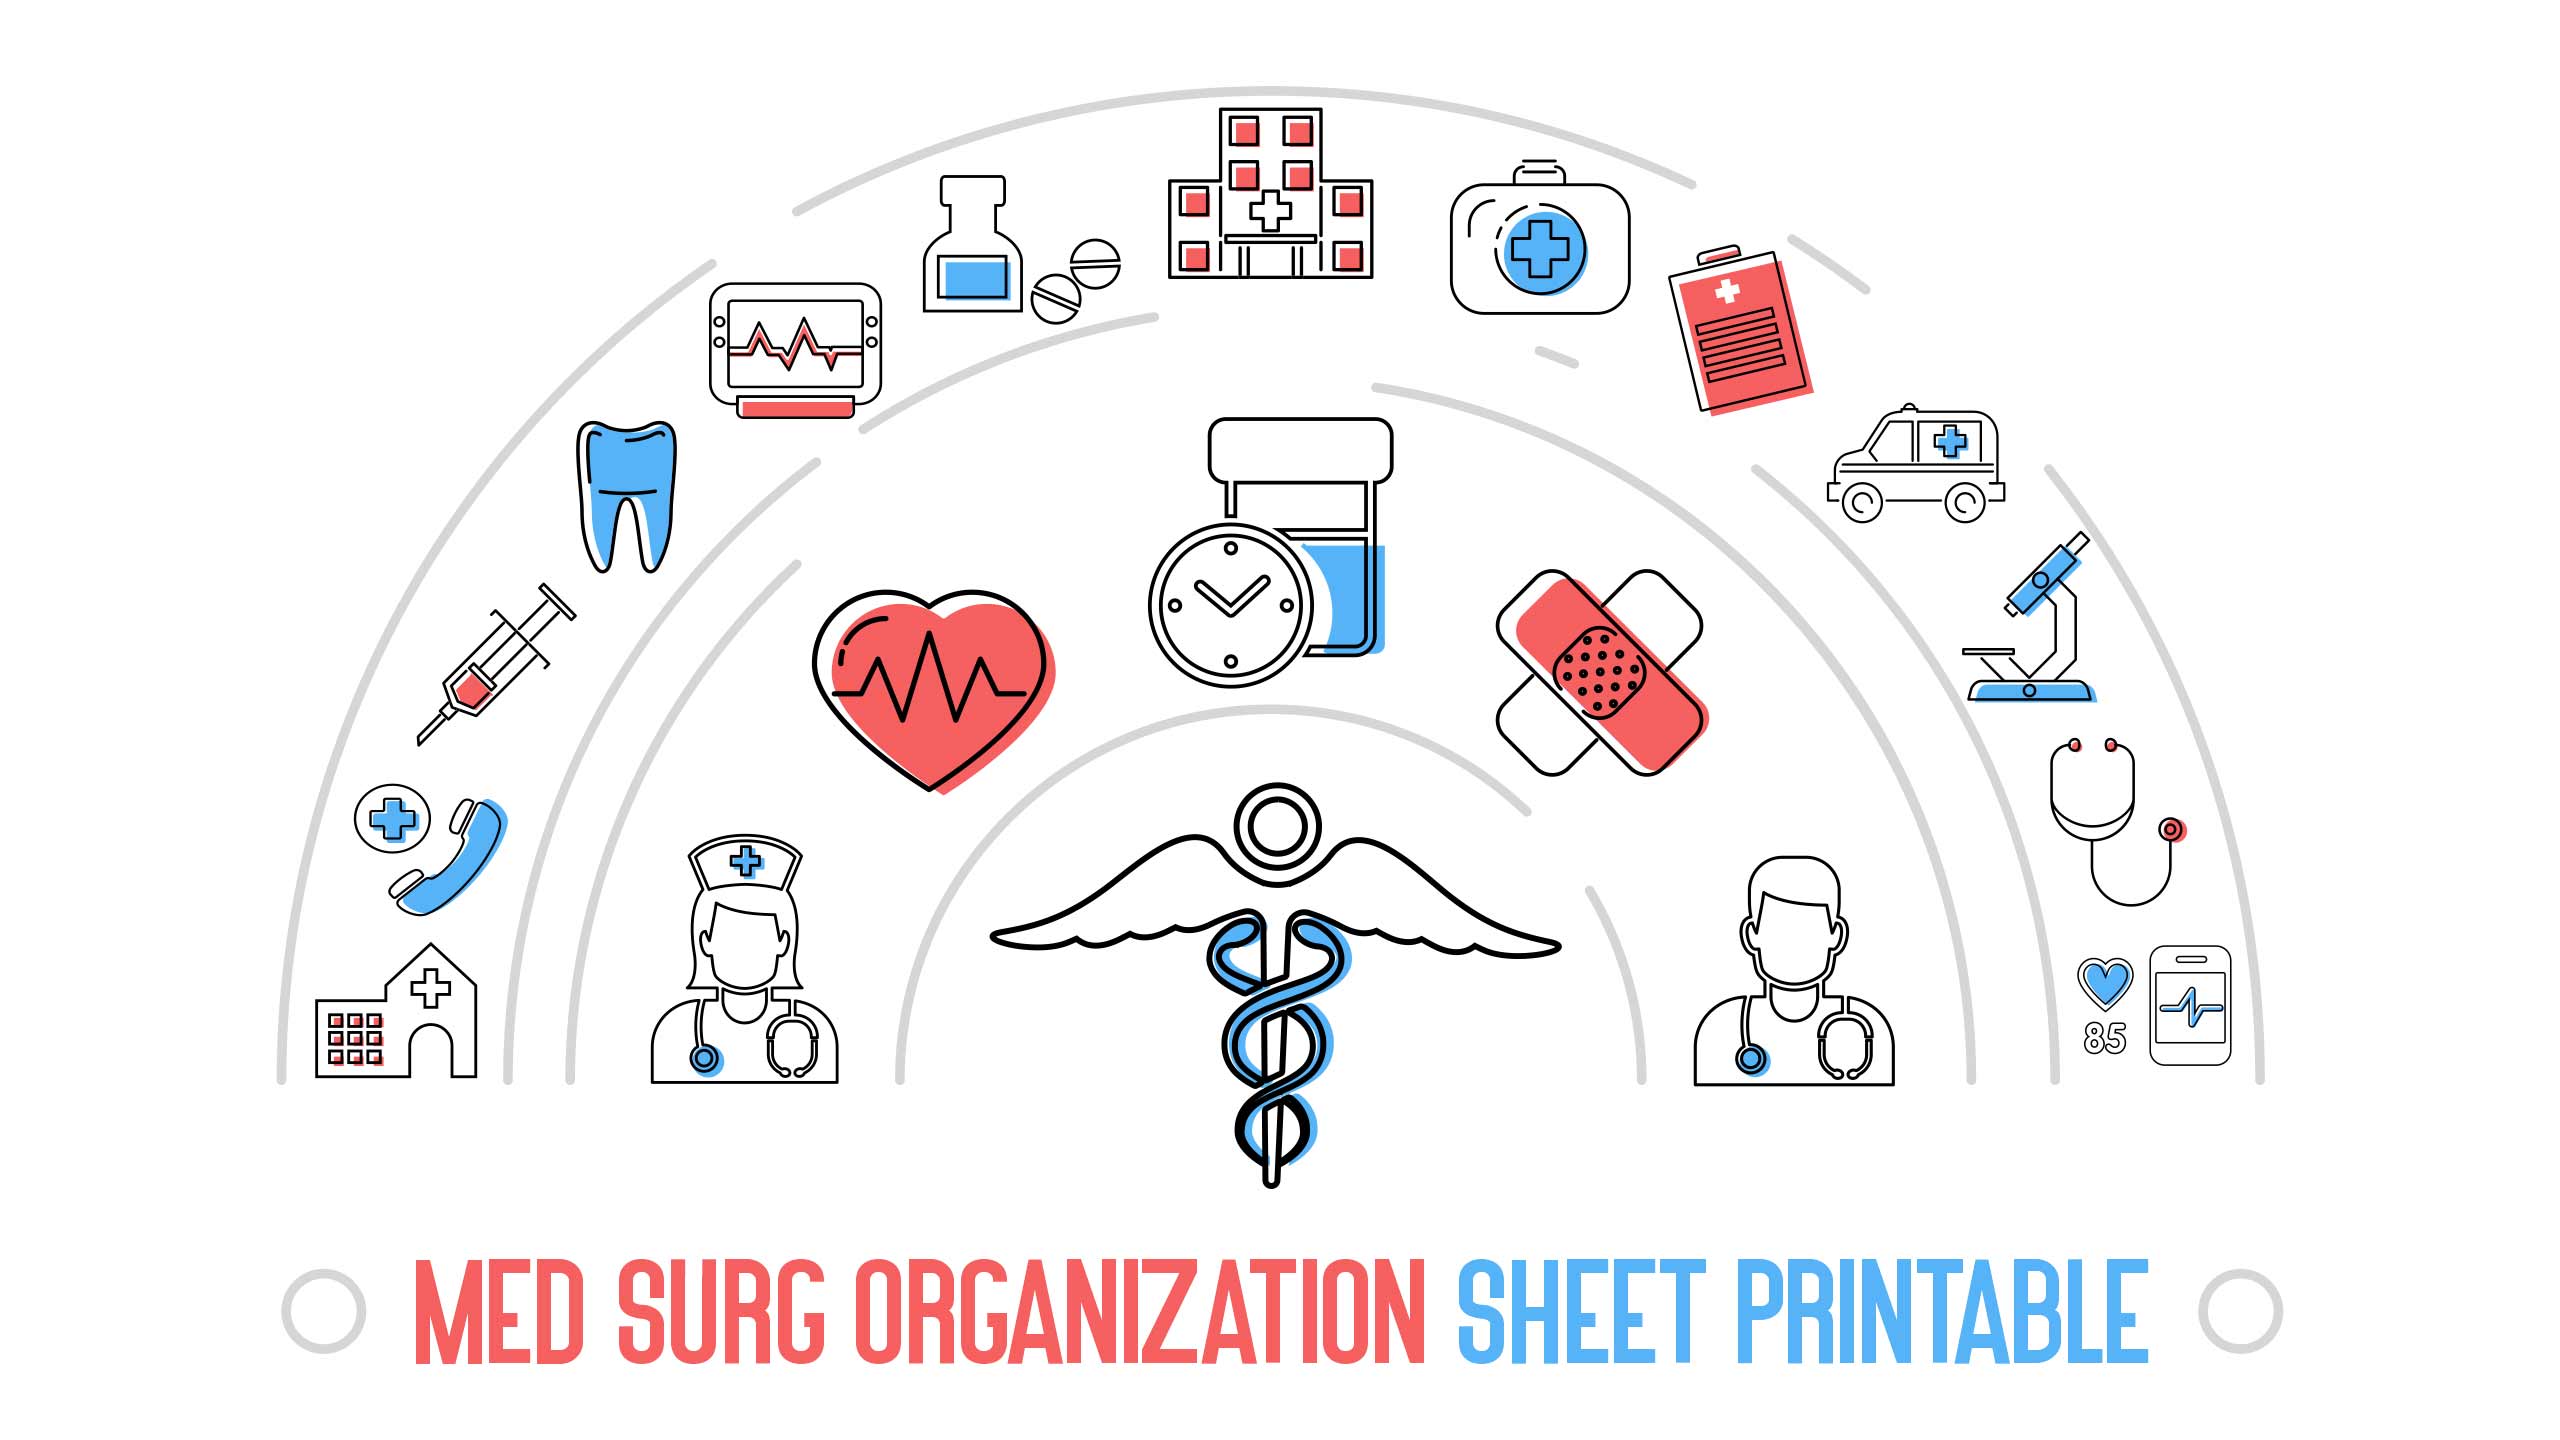 Med Surg Organization Sheet Printable